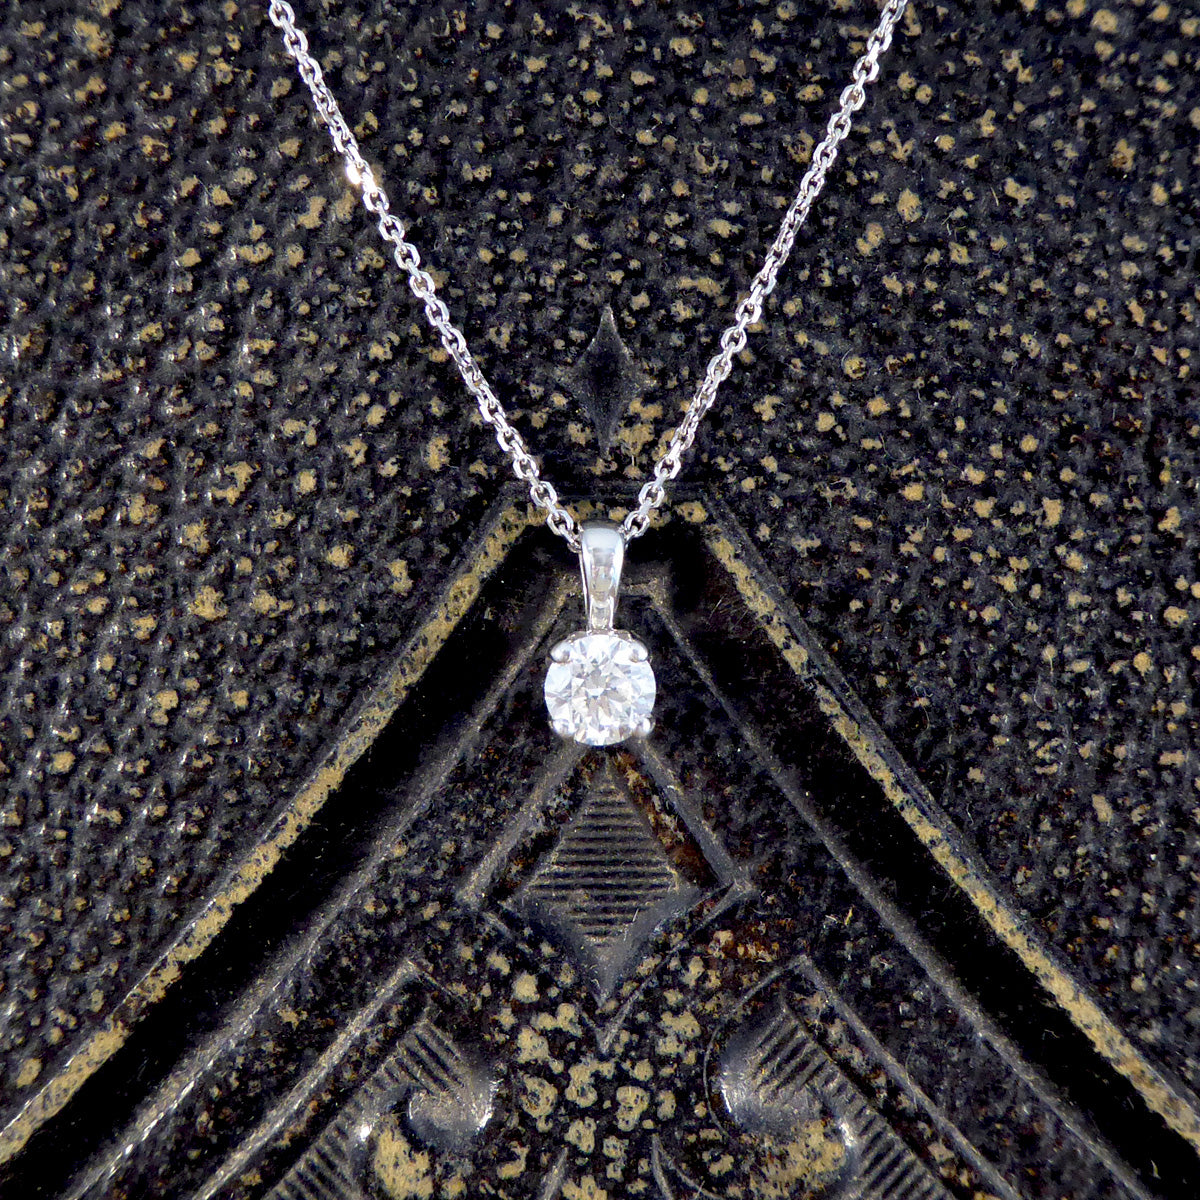 0.50ct Diamond Solitaire Pendant Necklace in 18ct White Gold